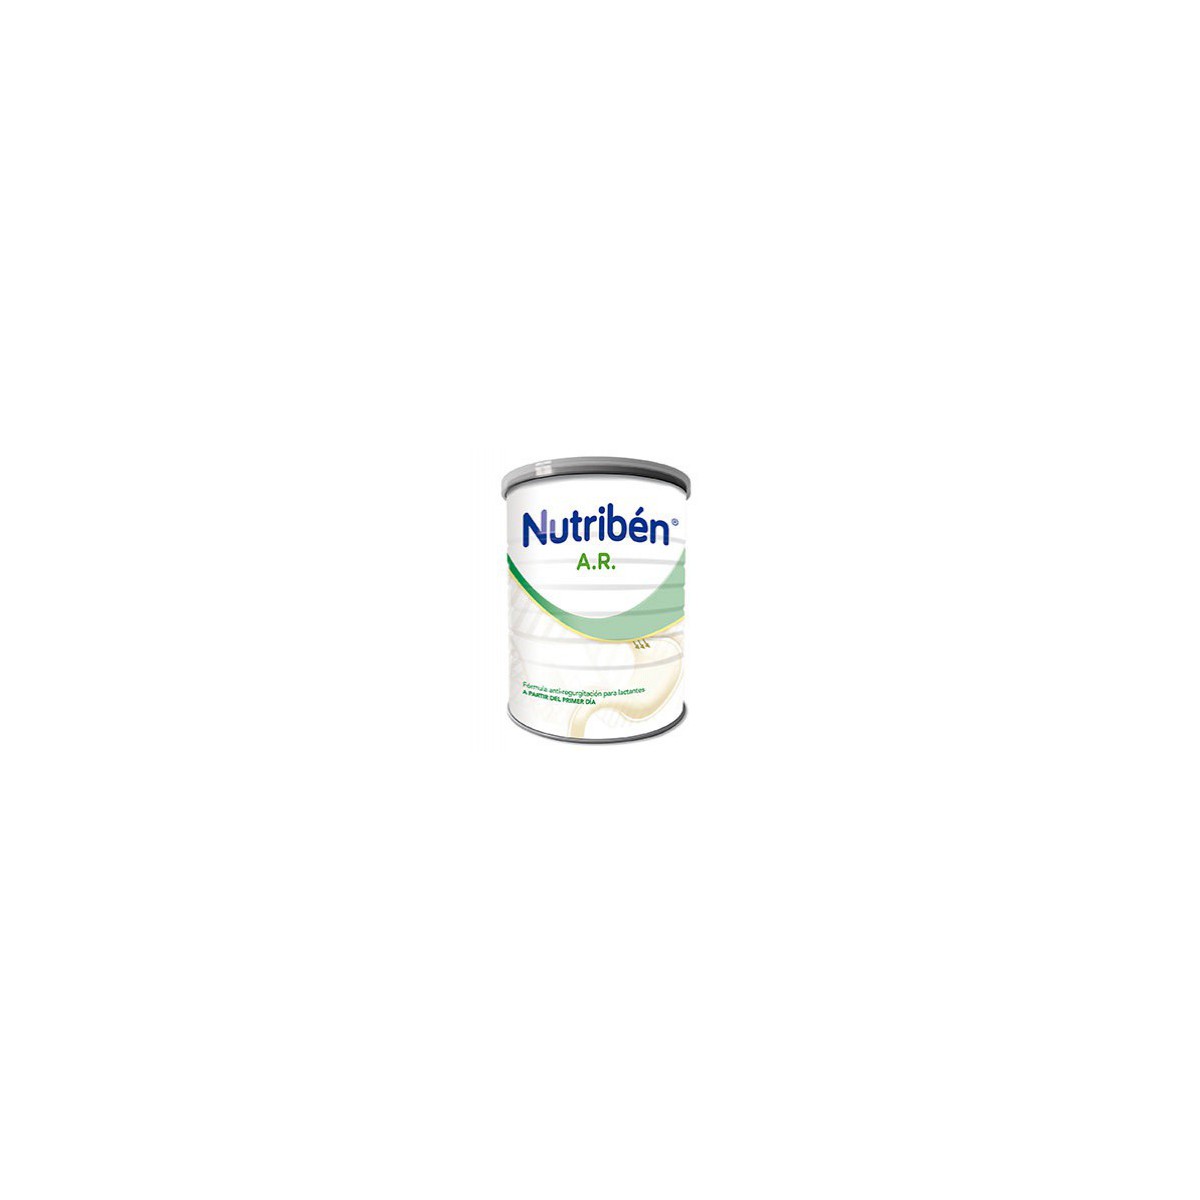 Nutriben-Ar 2 Milk Powder 800g